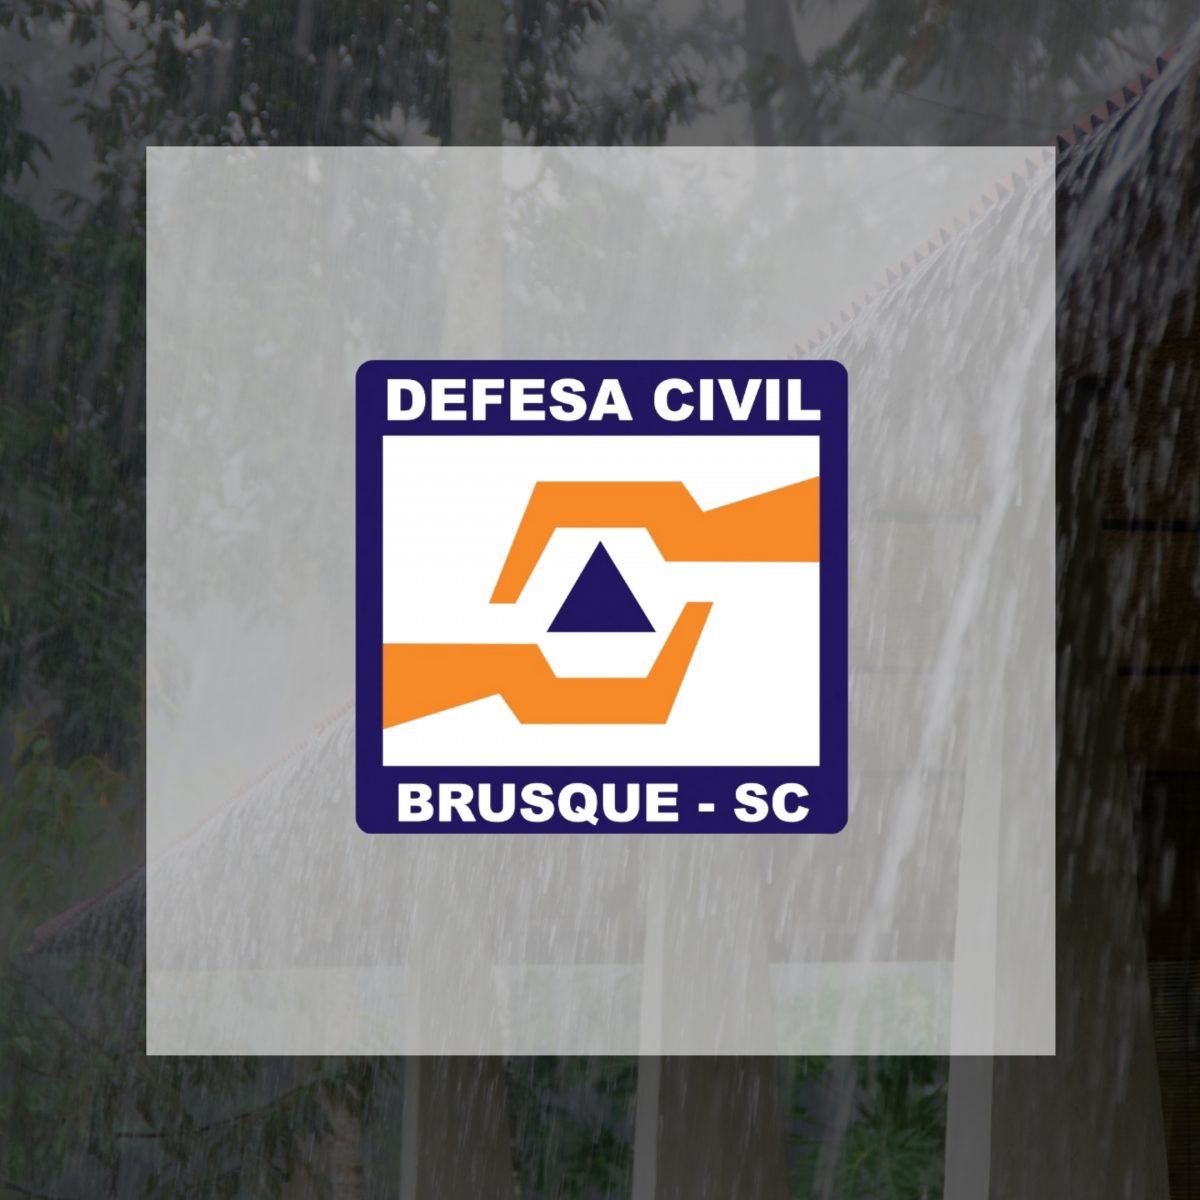 Defesa Civil alerta para possível ocorrência de chuva intensa